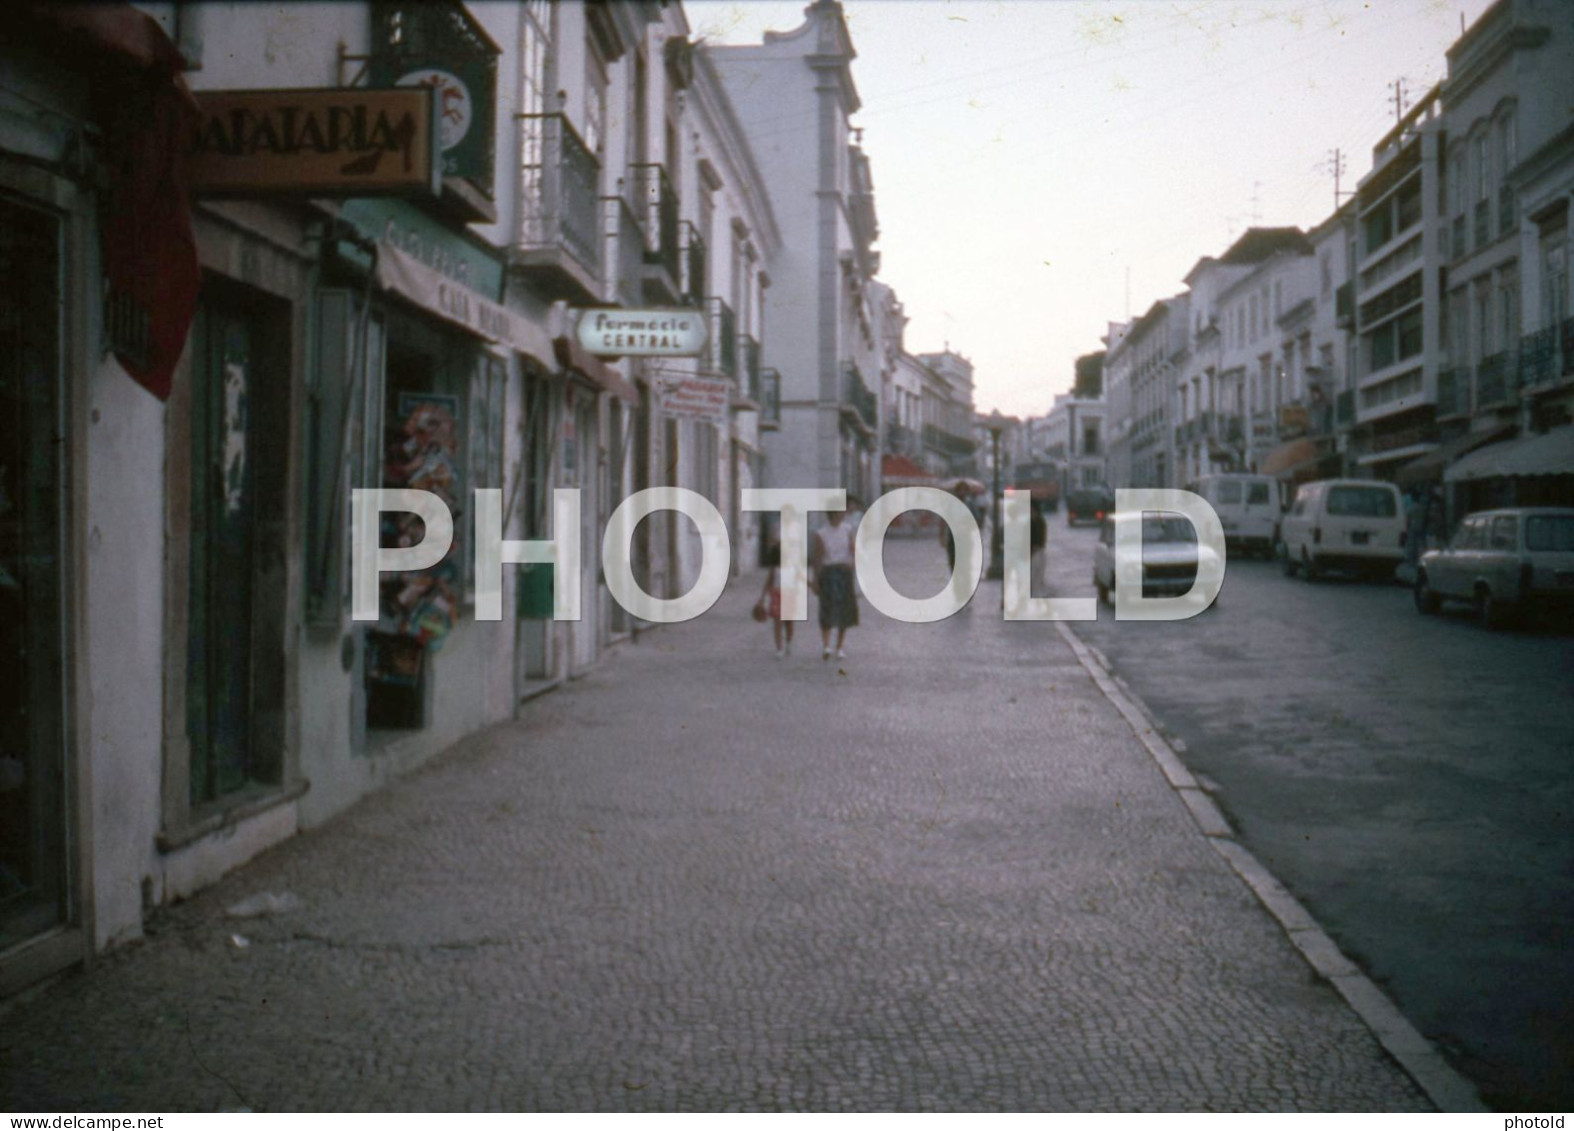 7 SLIDES SET 1984 ALGARVE PORTUGAL 16mm DIAPOSITIVE SLIDE Not PHOTO No FOTO Nb4084 - Diapositives